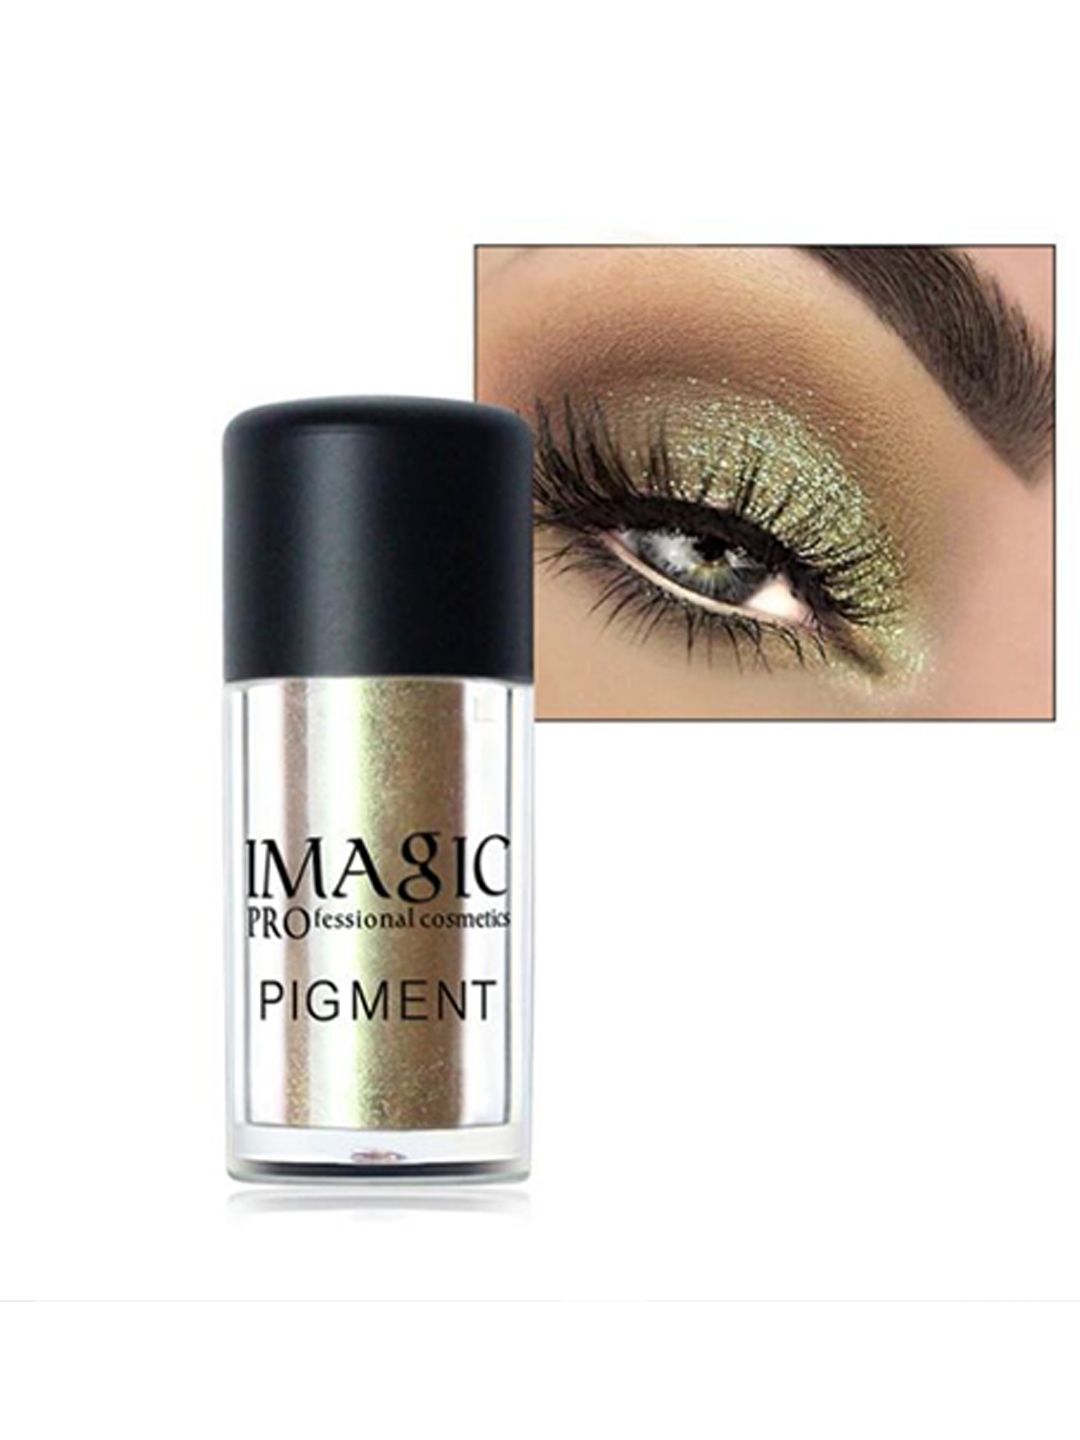 IMAGIC Professional Cosmetics Pigment Loose Powder Eyeshadow 2 g - Blinding P2 Price in India